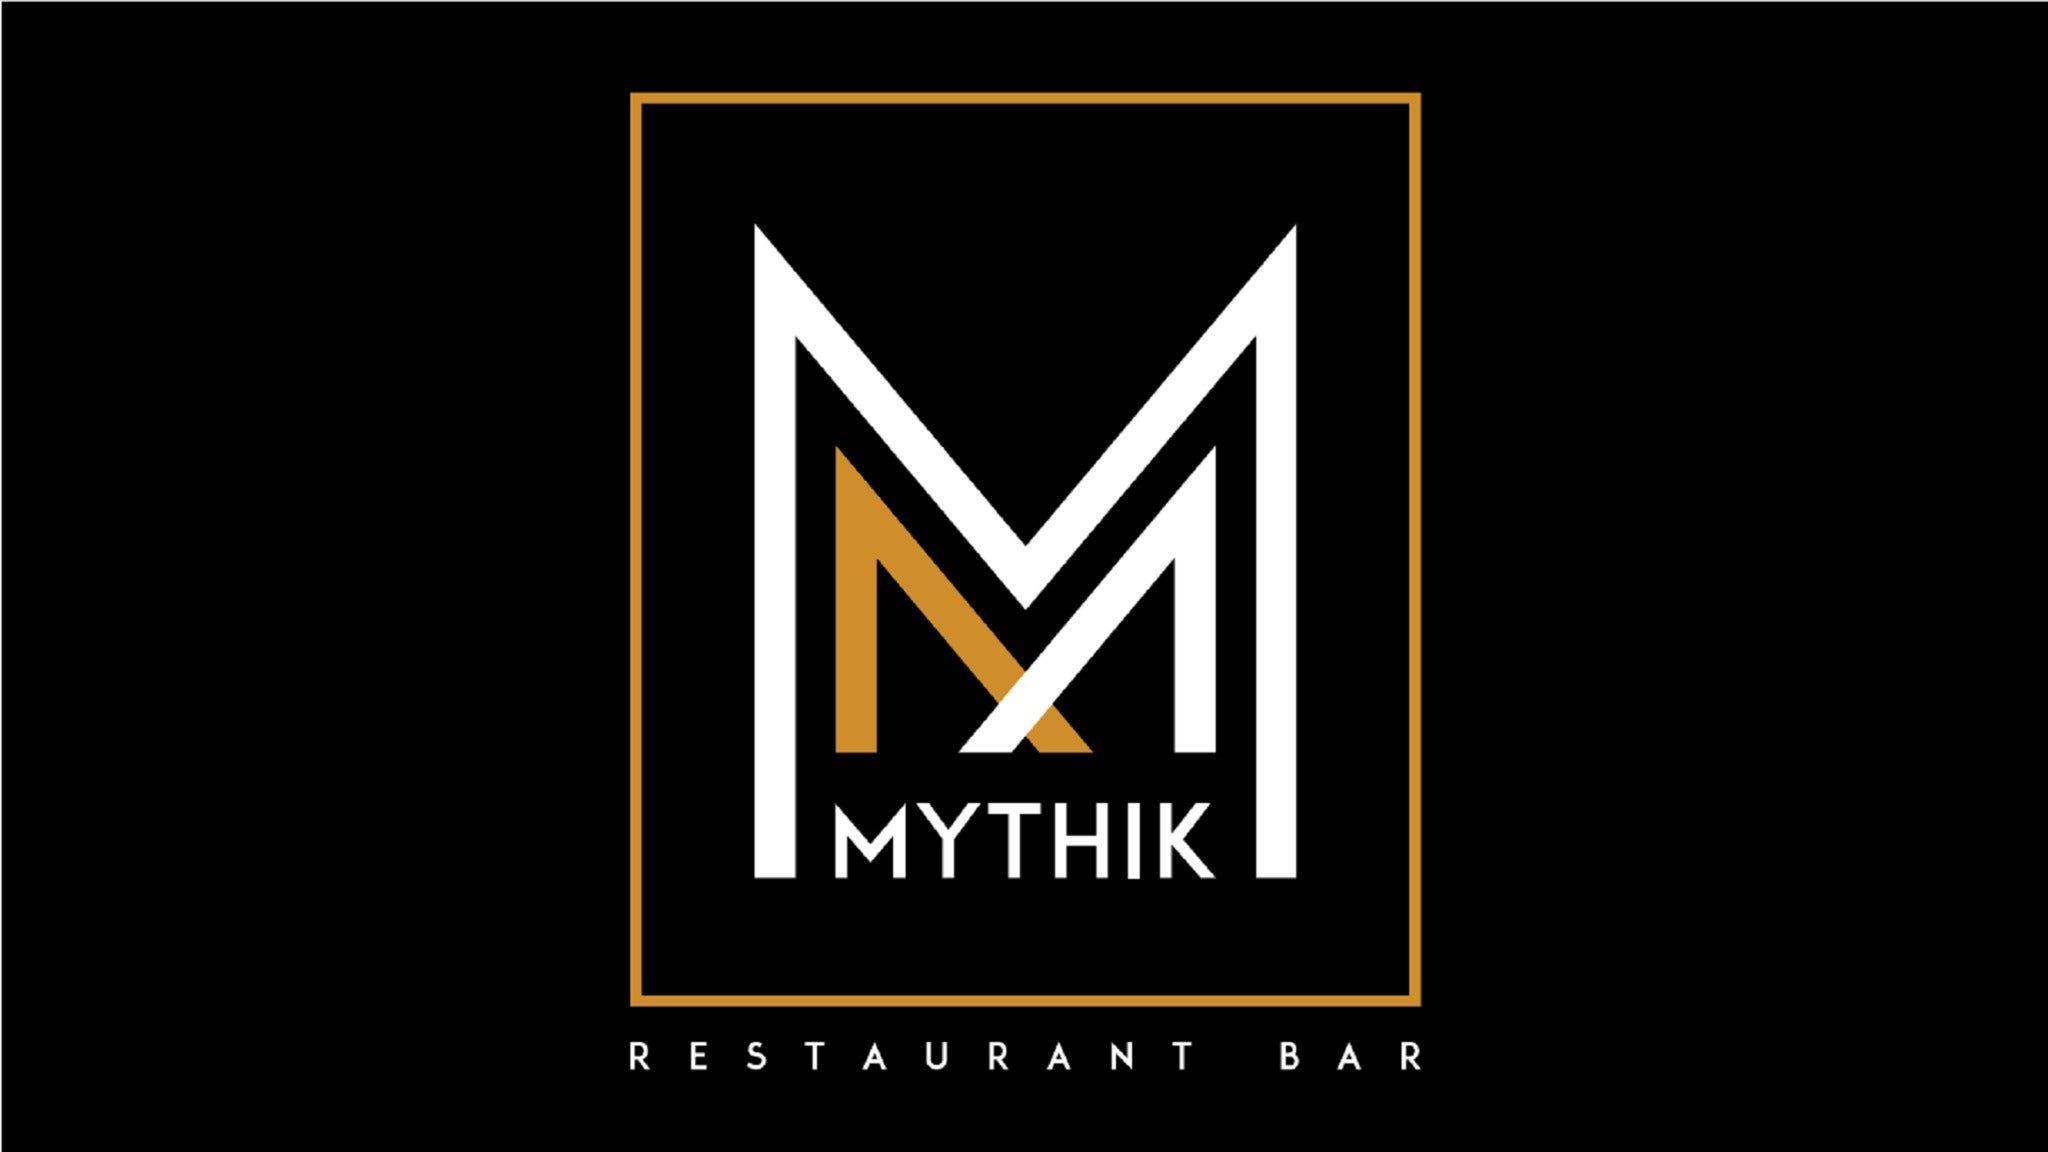 Centre Bell - Repas Restaurant Mythik - Iron Maiden